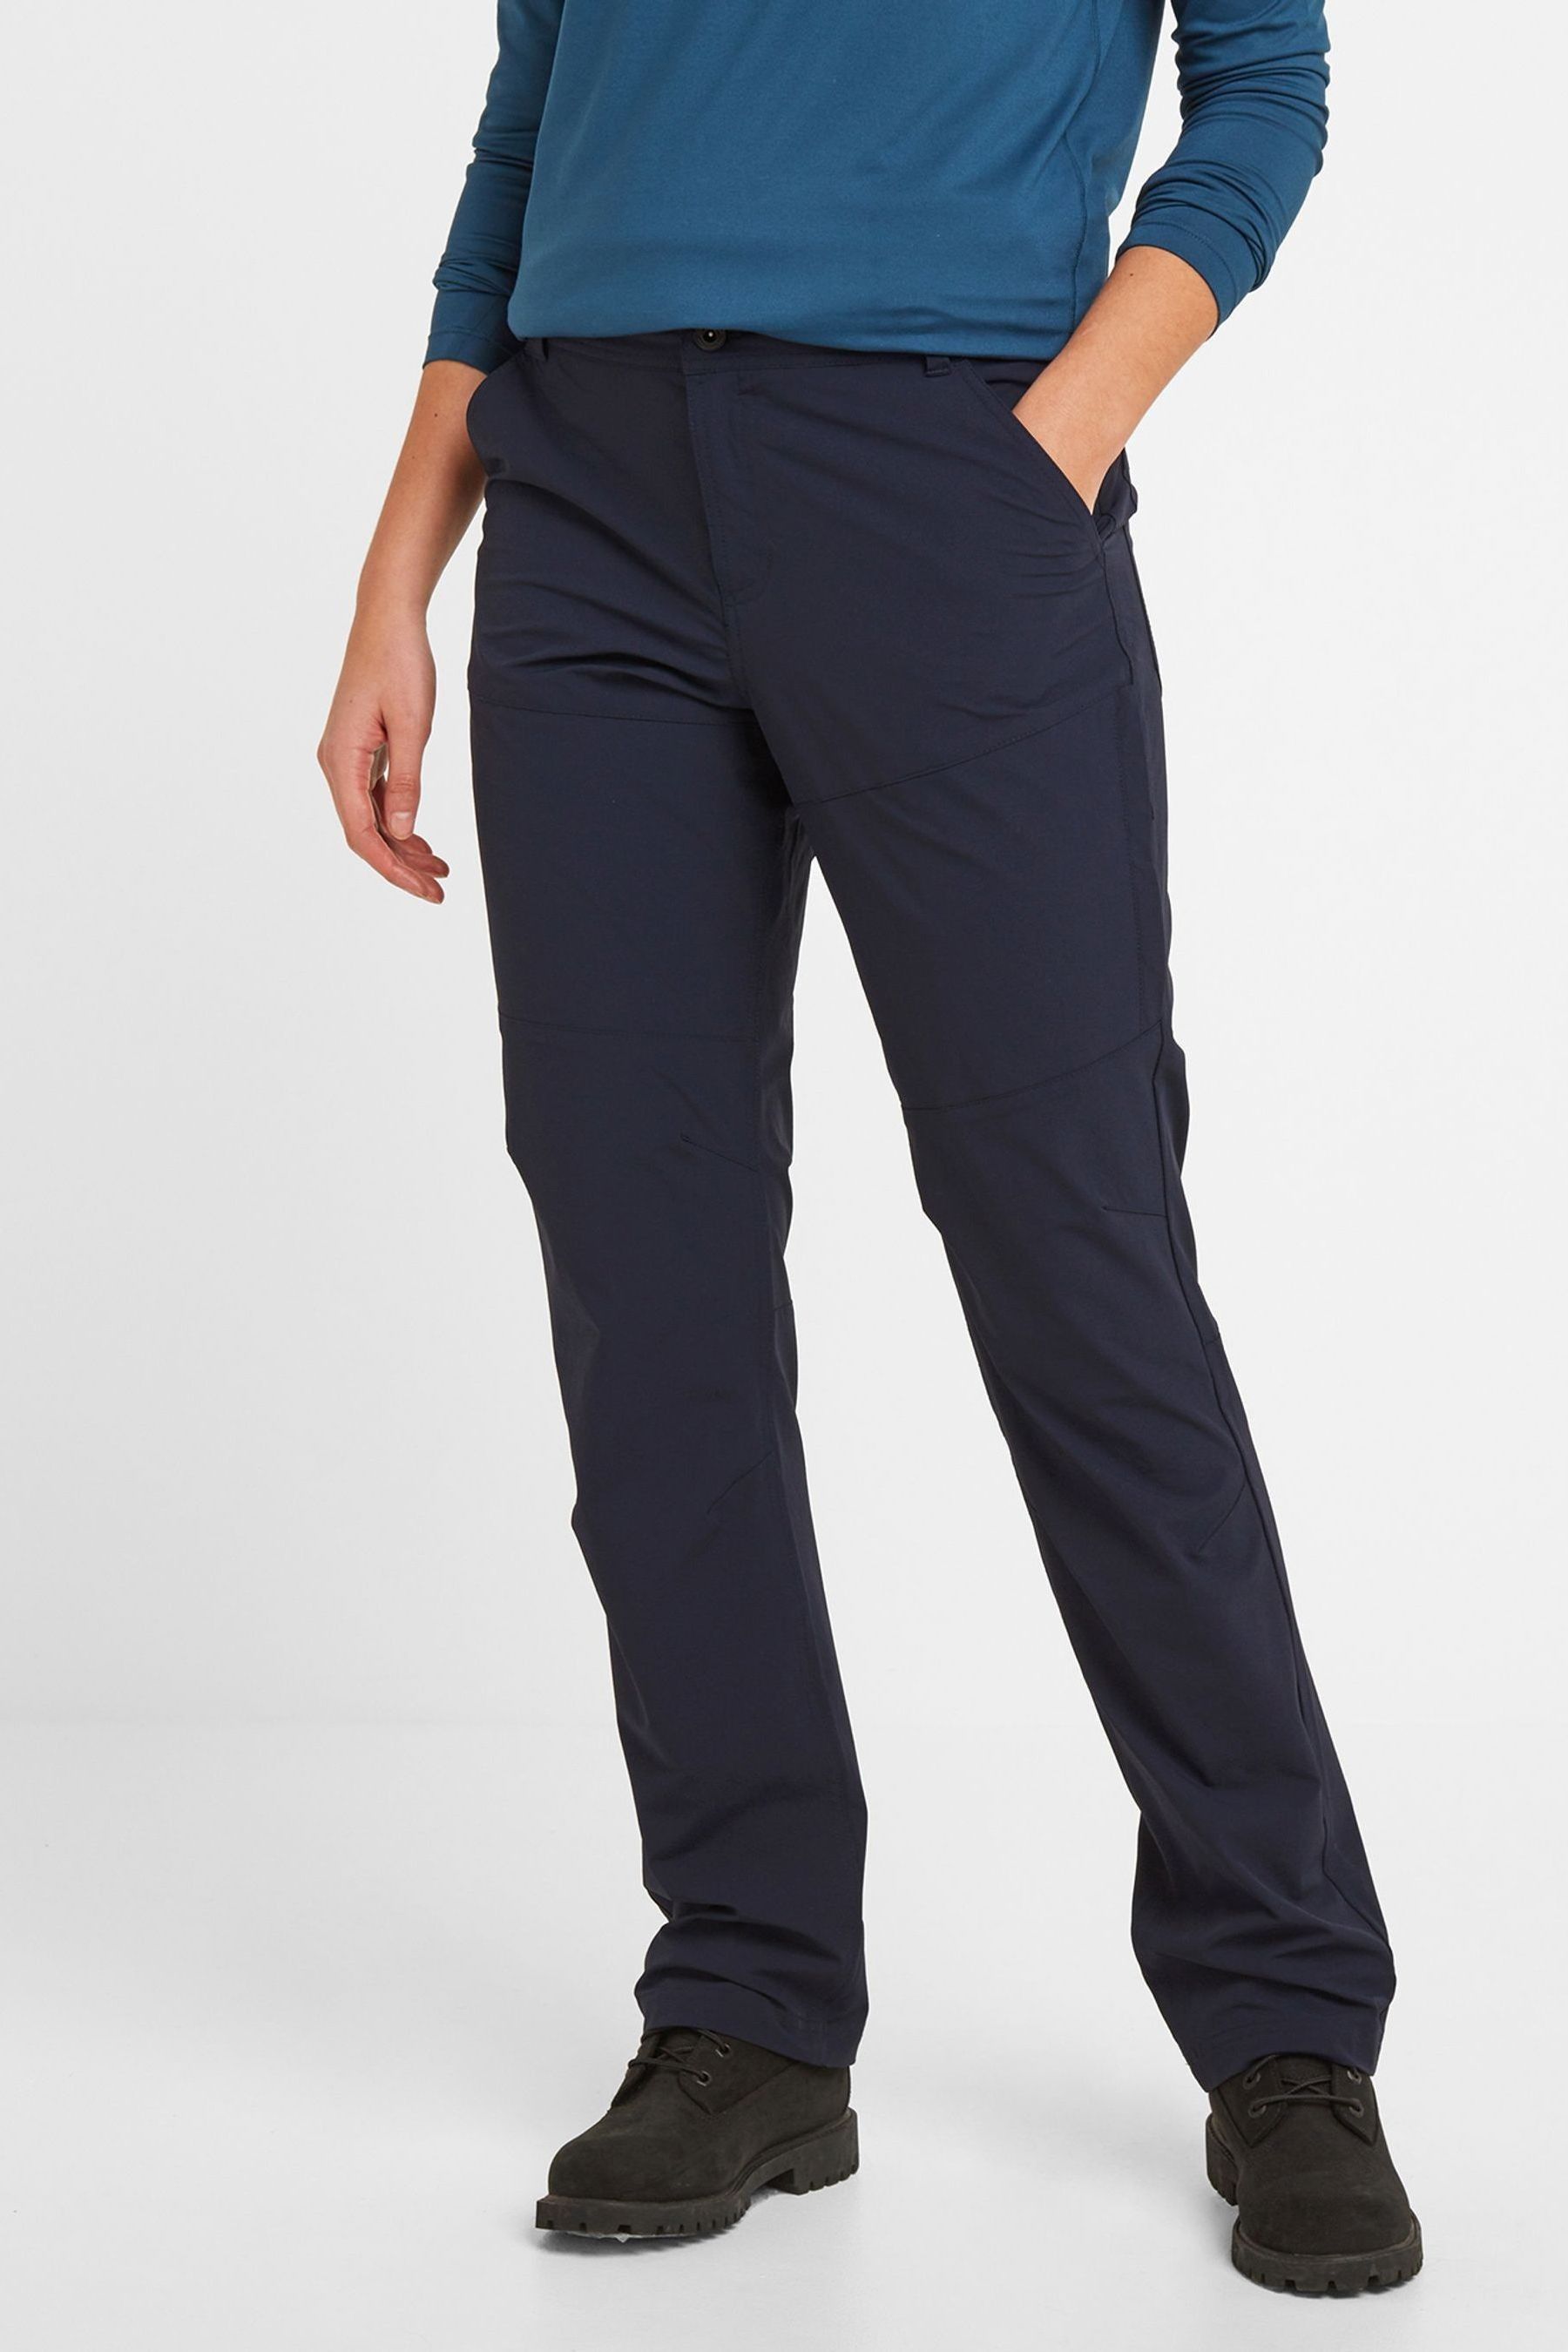 Buy Tog 24 Womens Blue Denver Tech Regular Walking Trousers from the ...